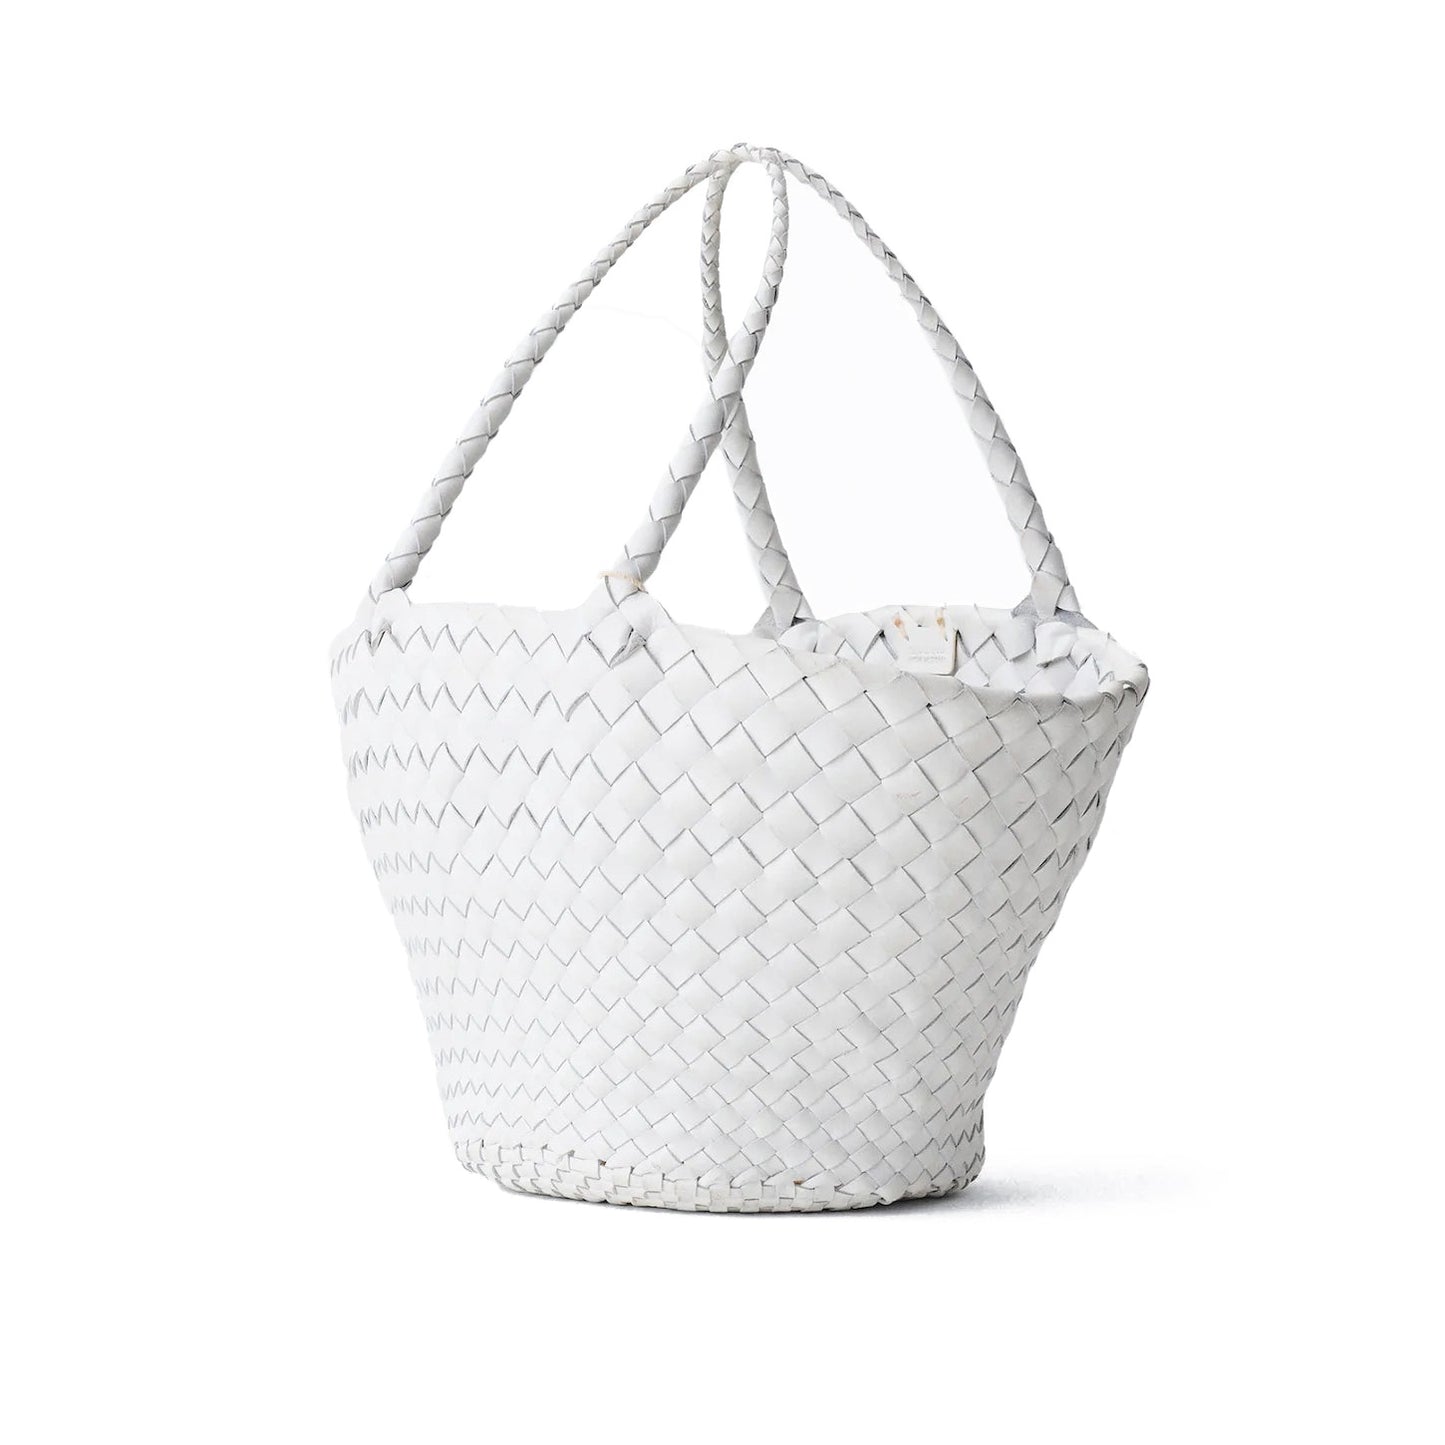 Egola Basket Bag in White